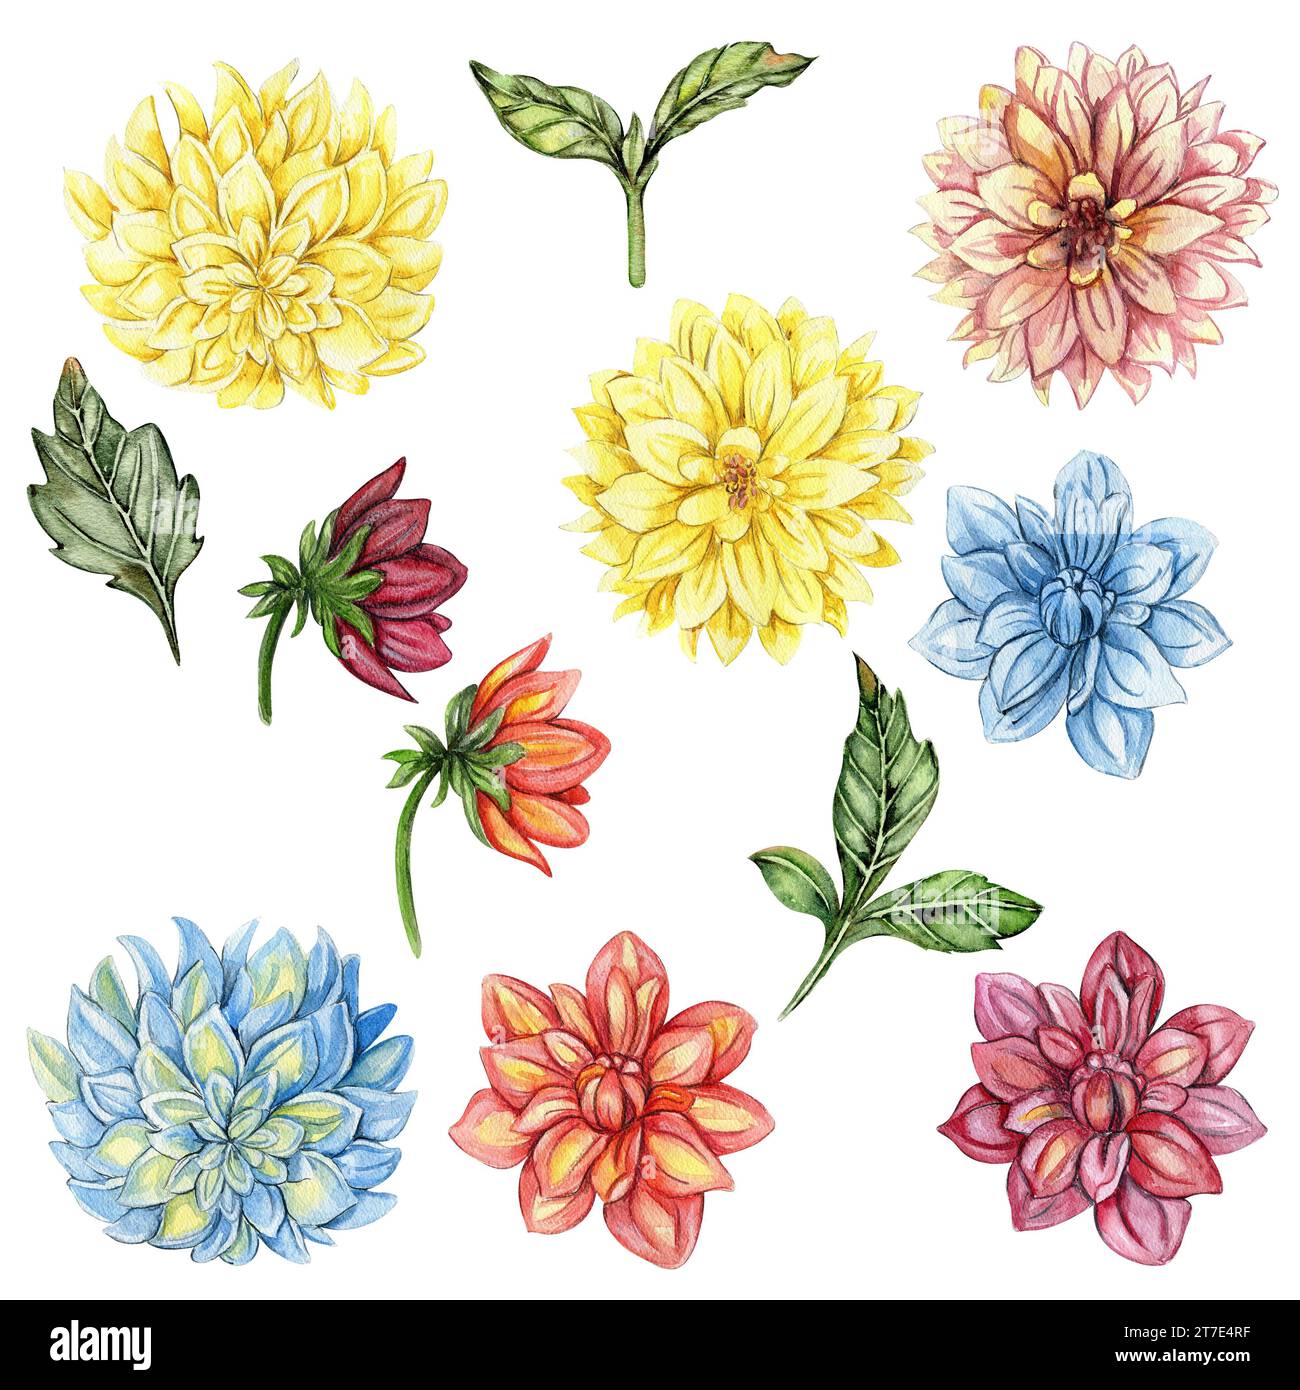 Indigo Dahlia - PRINT, monochrome, watercolor, floral, blue, stems.  flowers, botanical art